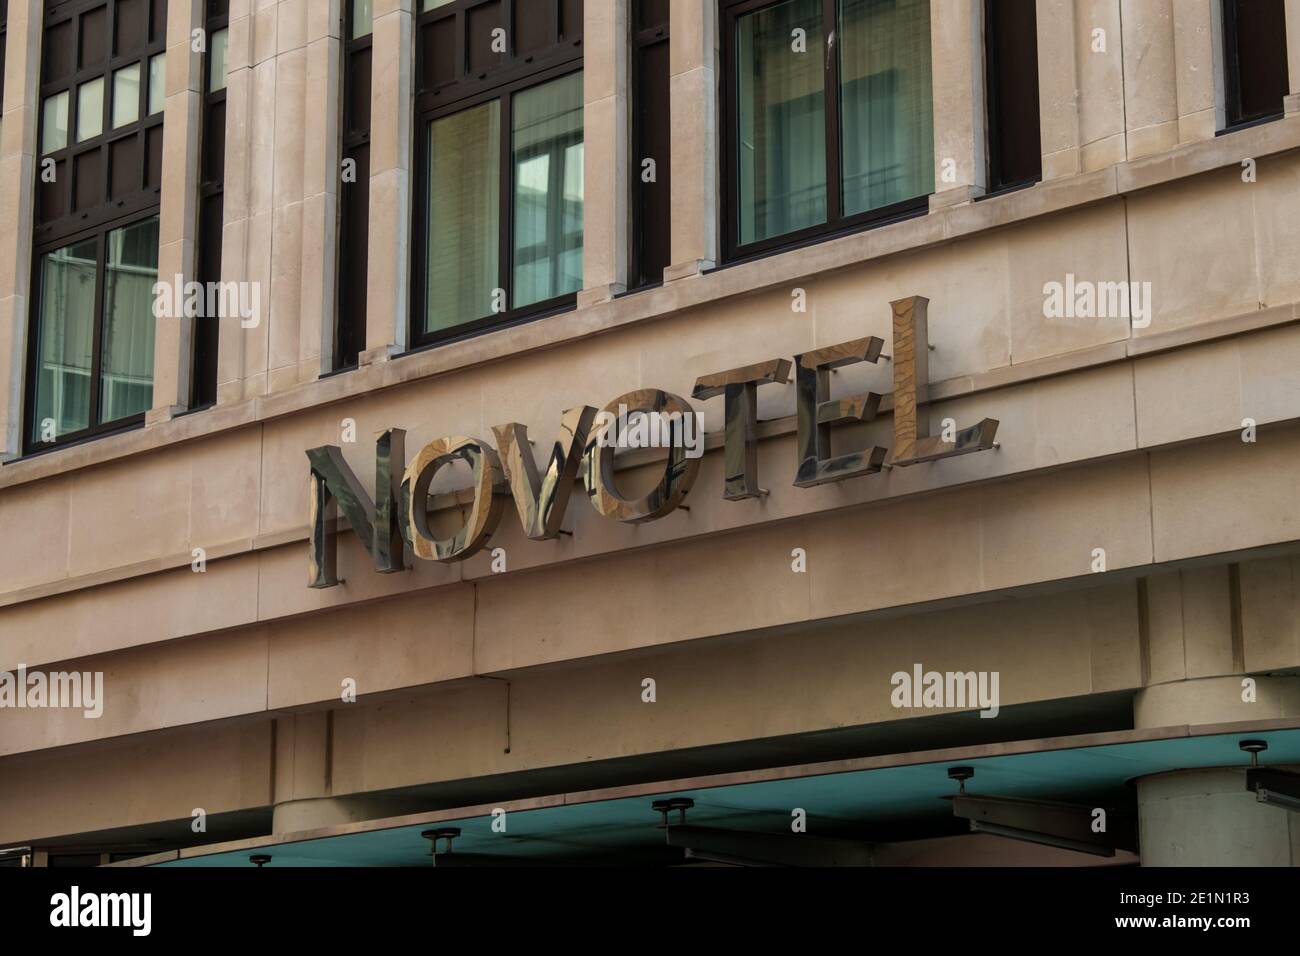 Londra - Novotel Hotel Signage, una catena alberghiera moderna e globale  Foto stock - Alamy